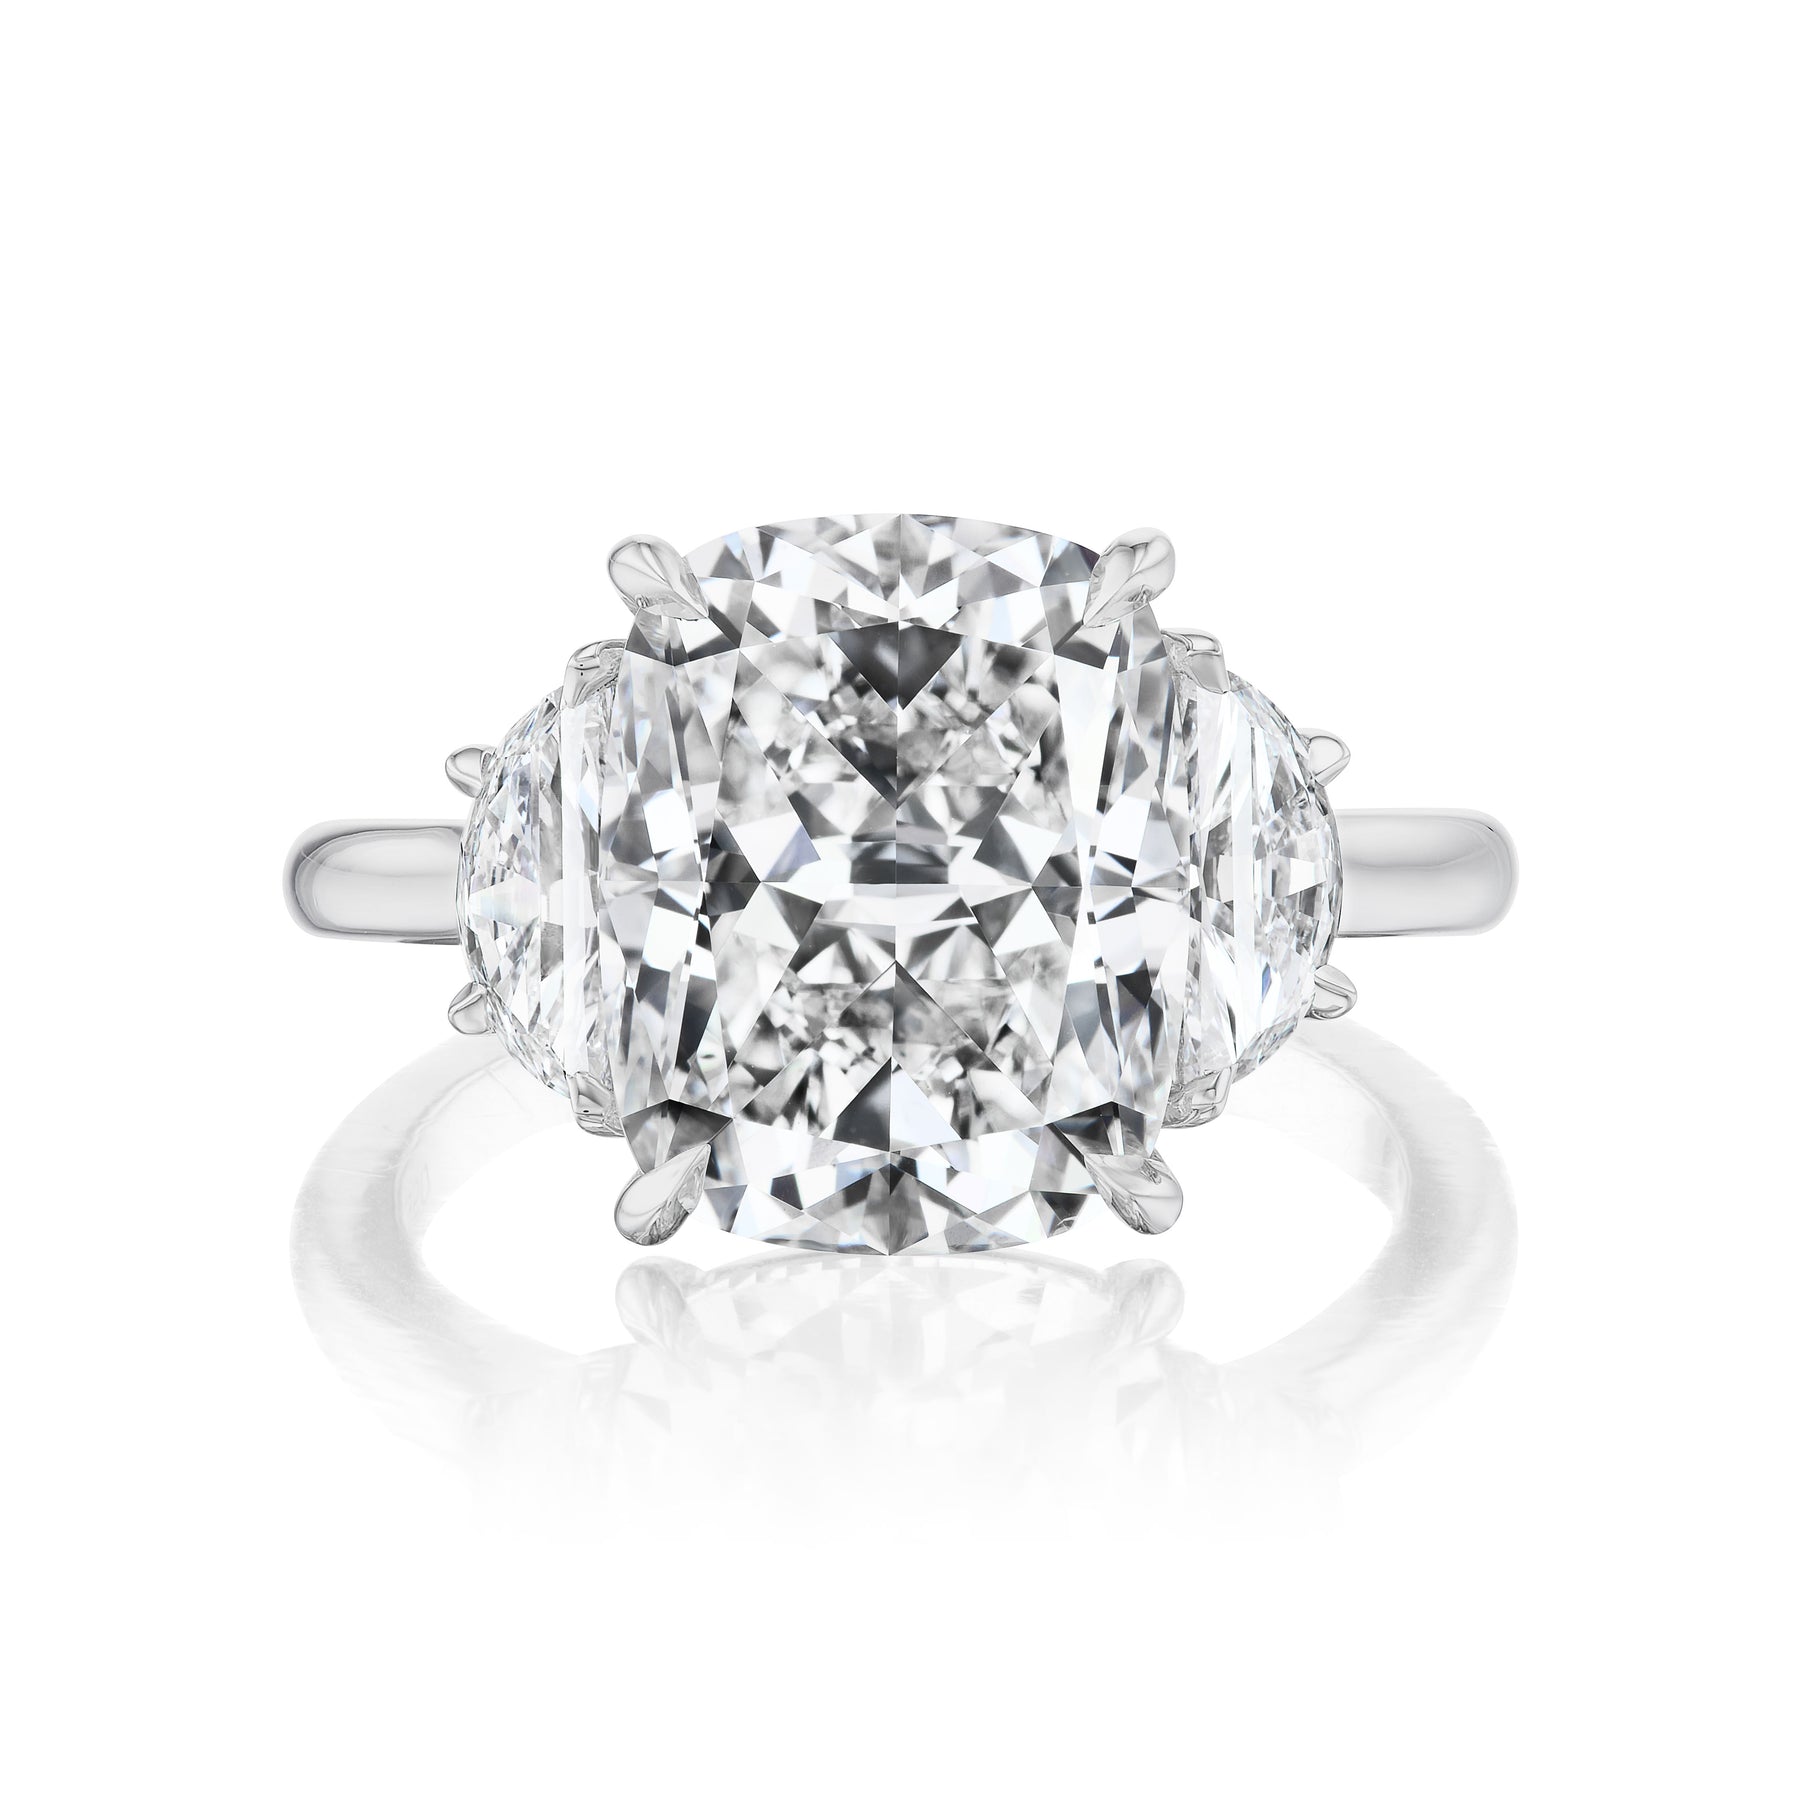 Cushion Cut Diamond Engagement Ring with Half Moon Side Stones